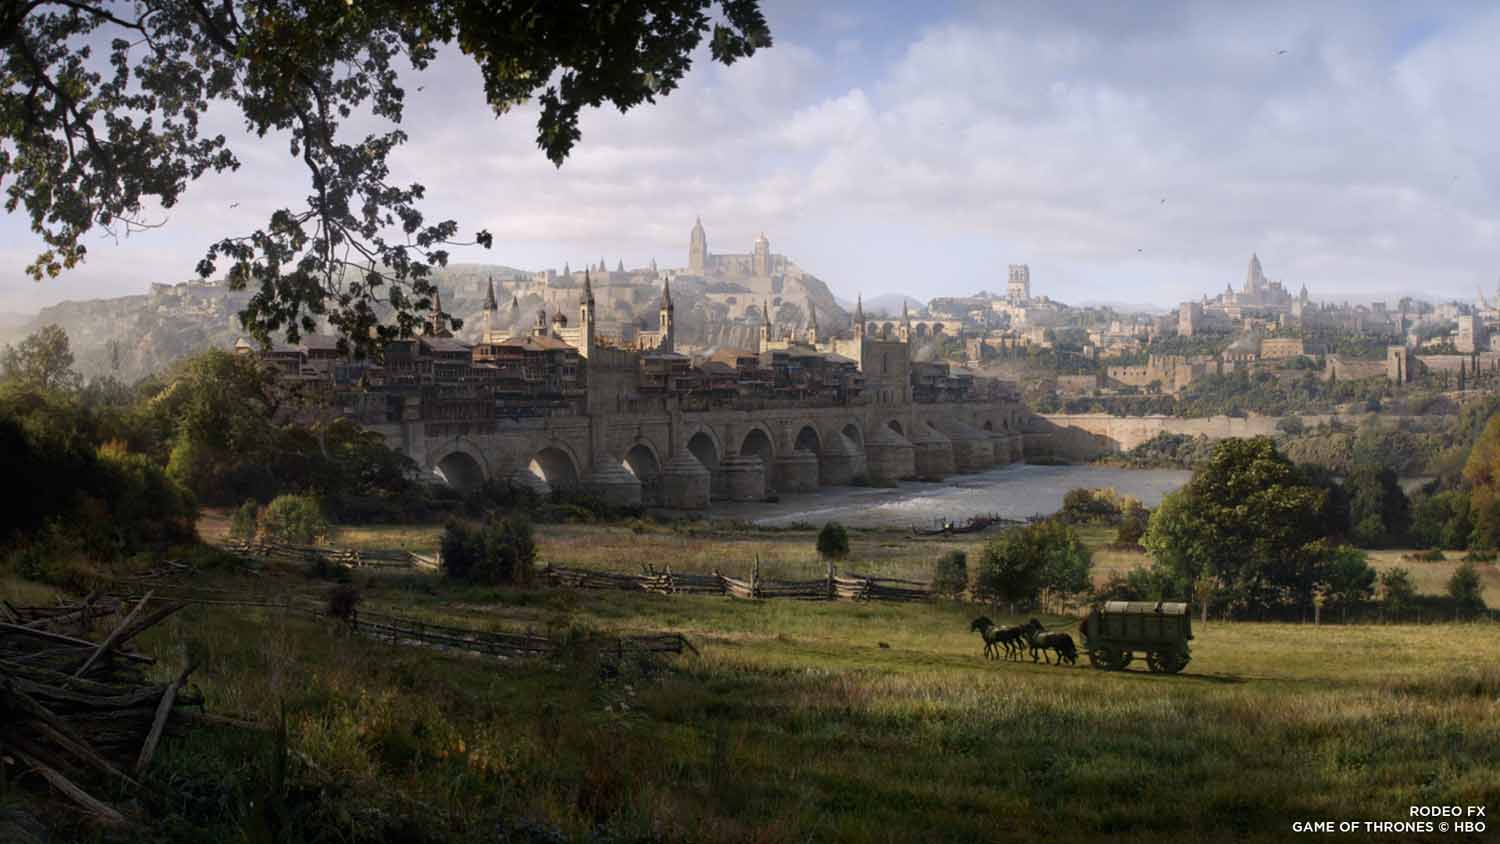 Game of Thrones' City of Volantis.